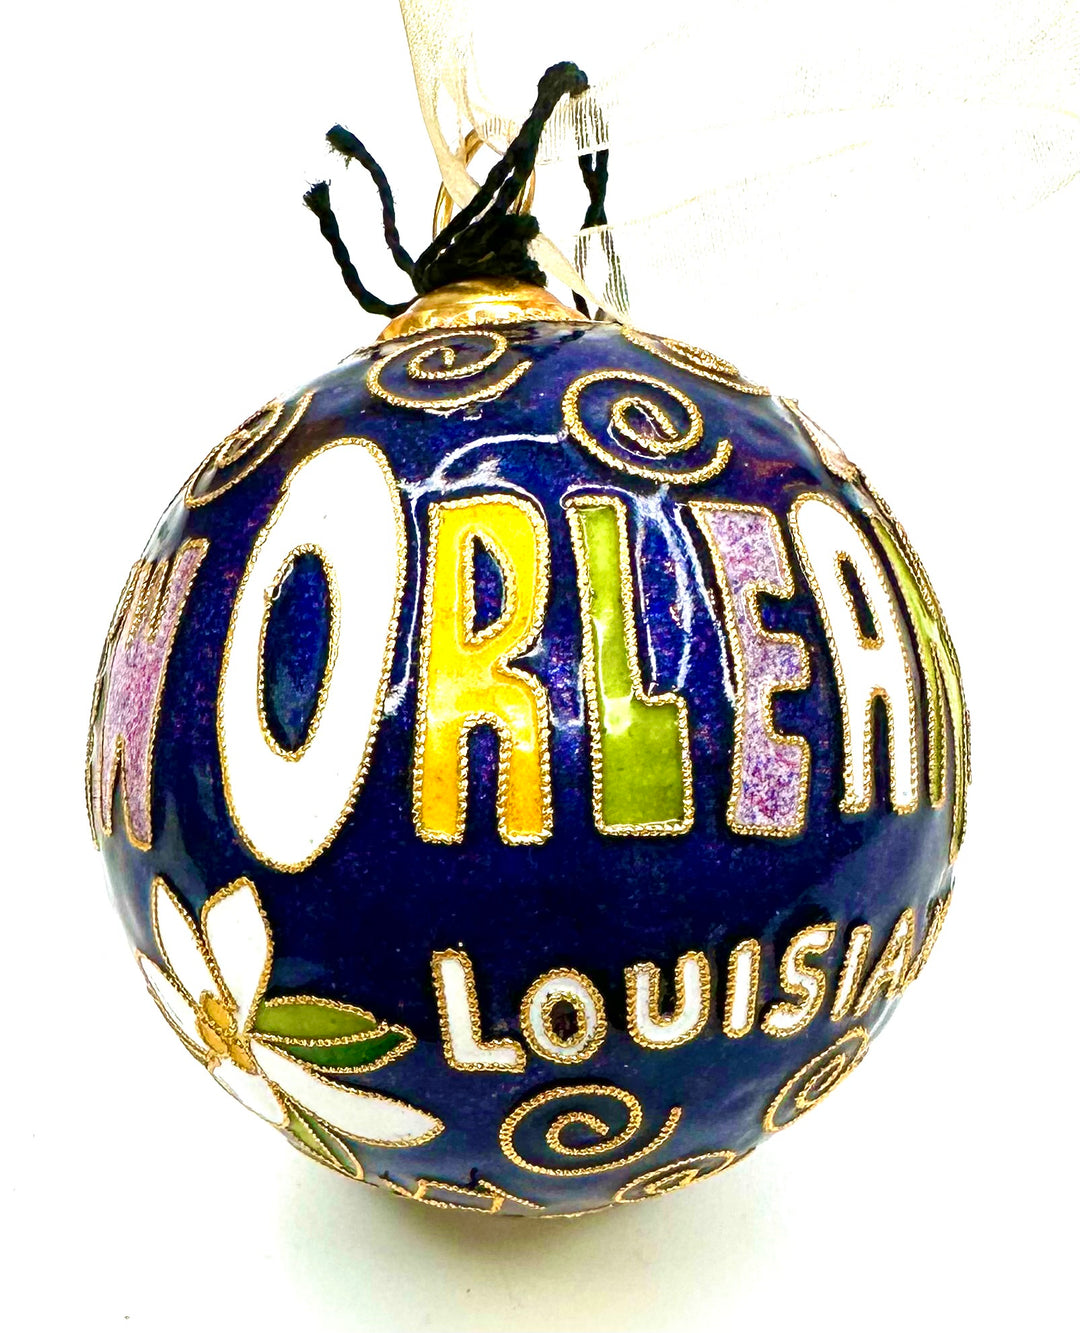 New Orleans, Louisiana in Mardi Gras Colors Magnolia Round Cloisonné Christmas Ornament - Purple